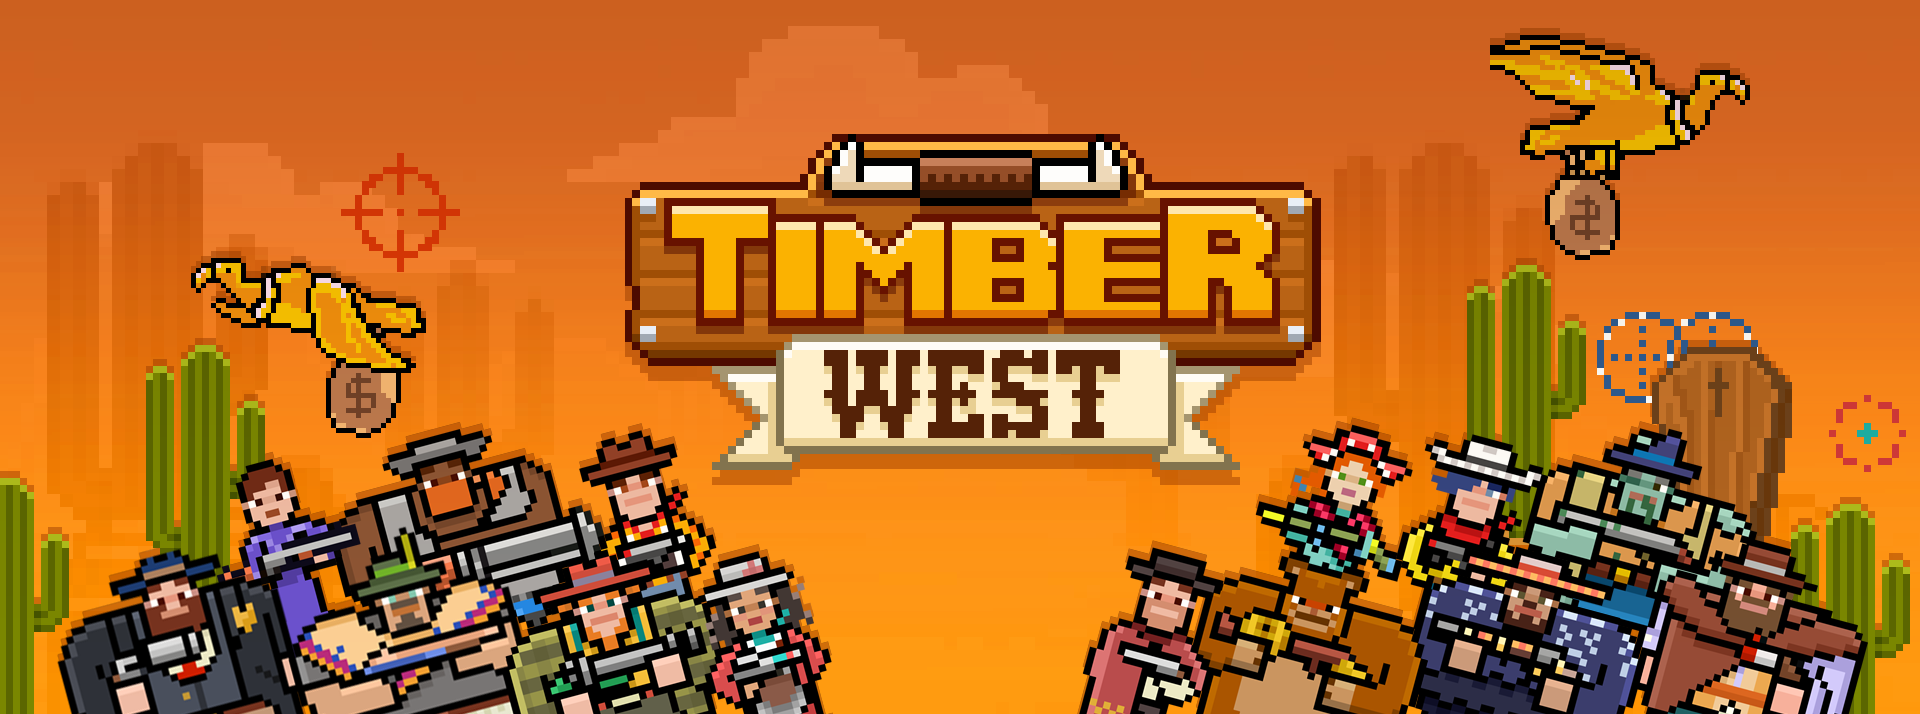 Banner of Timber West - Penembak Arcade Barat Liar 